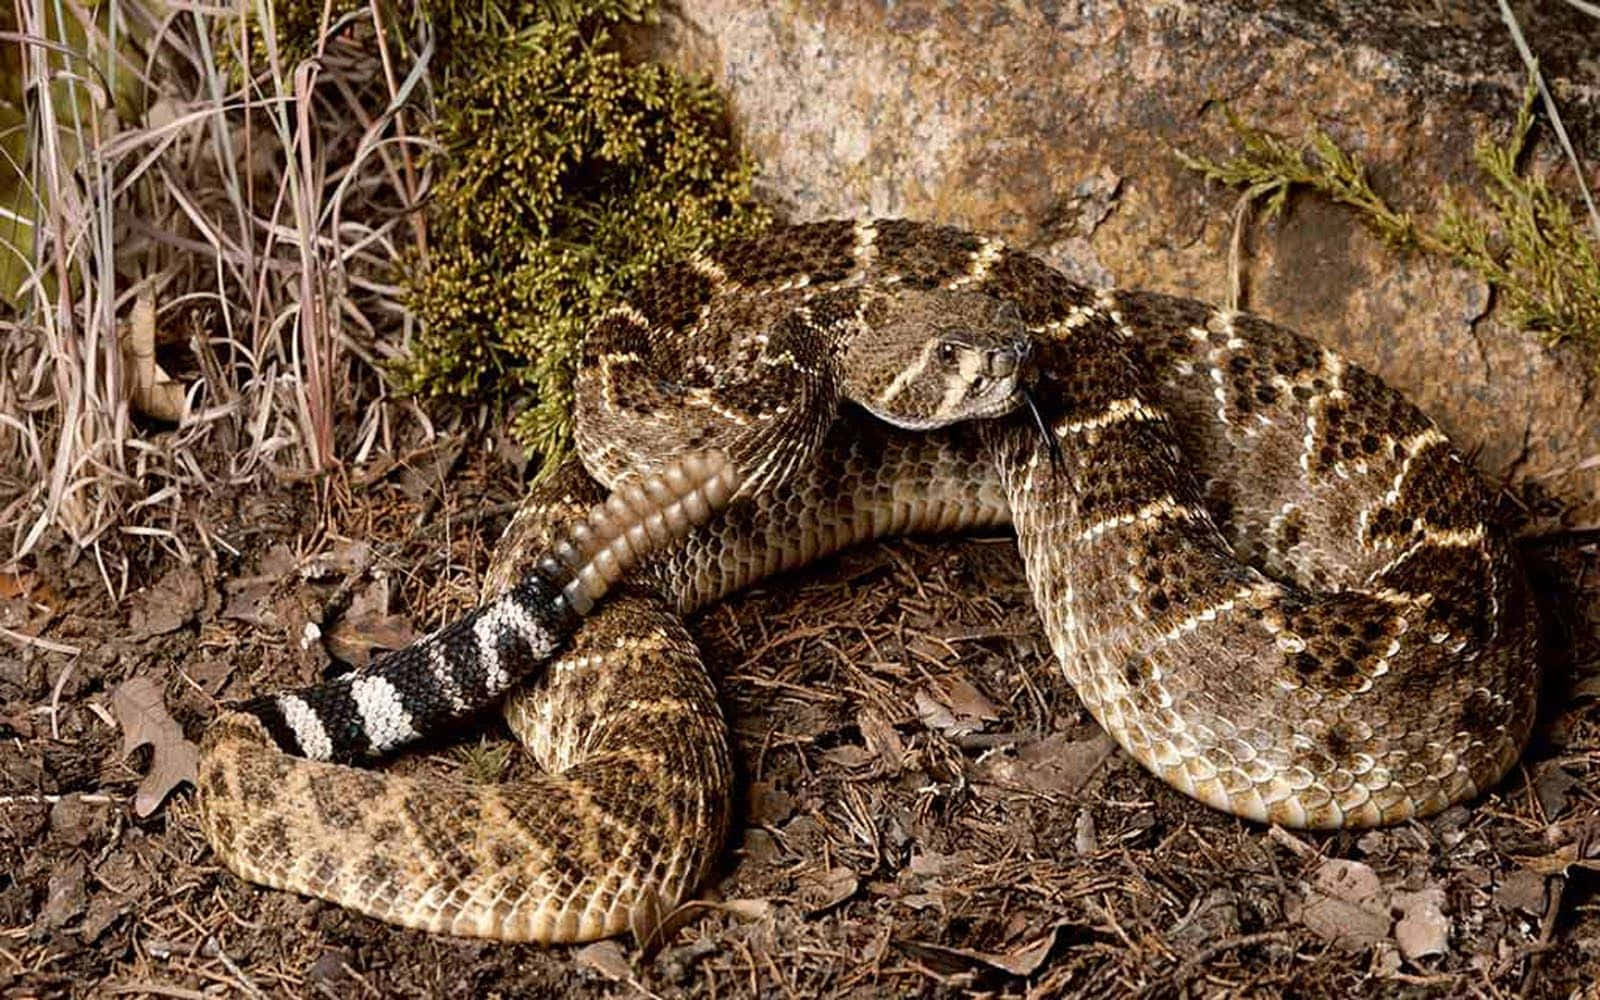 A Close Up of a Rattlesnake